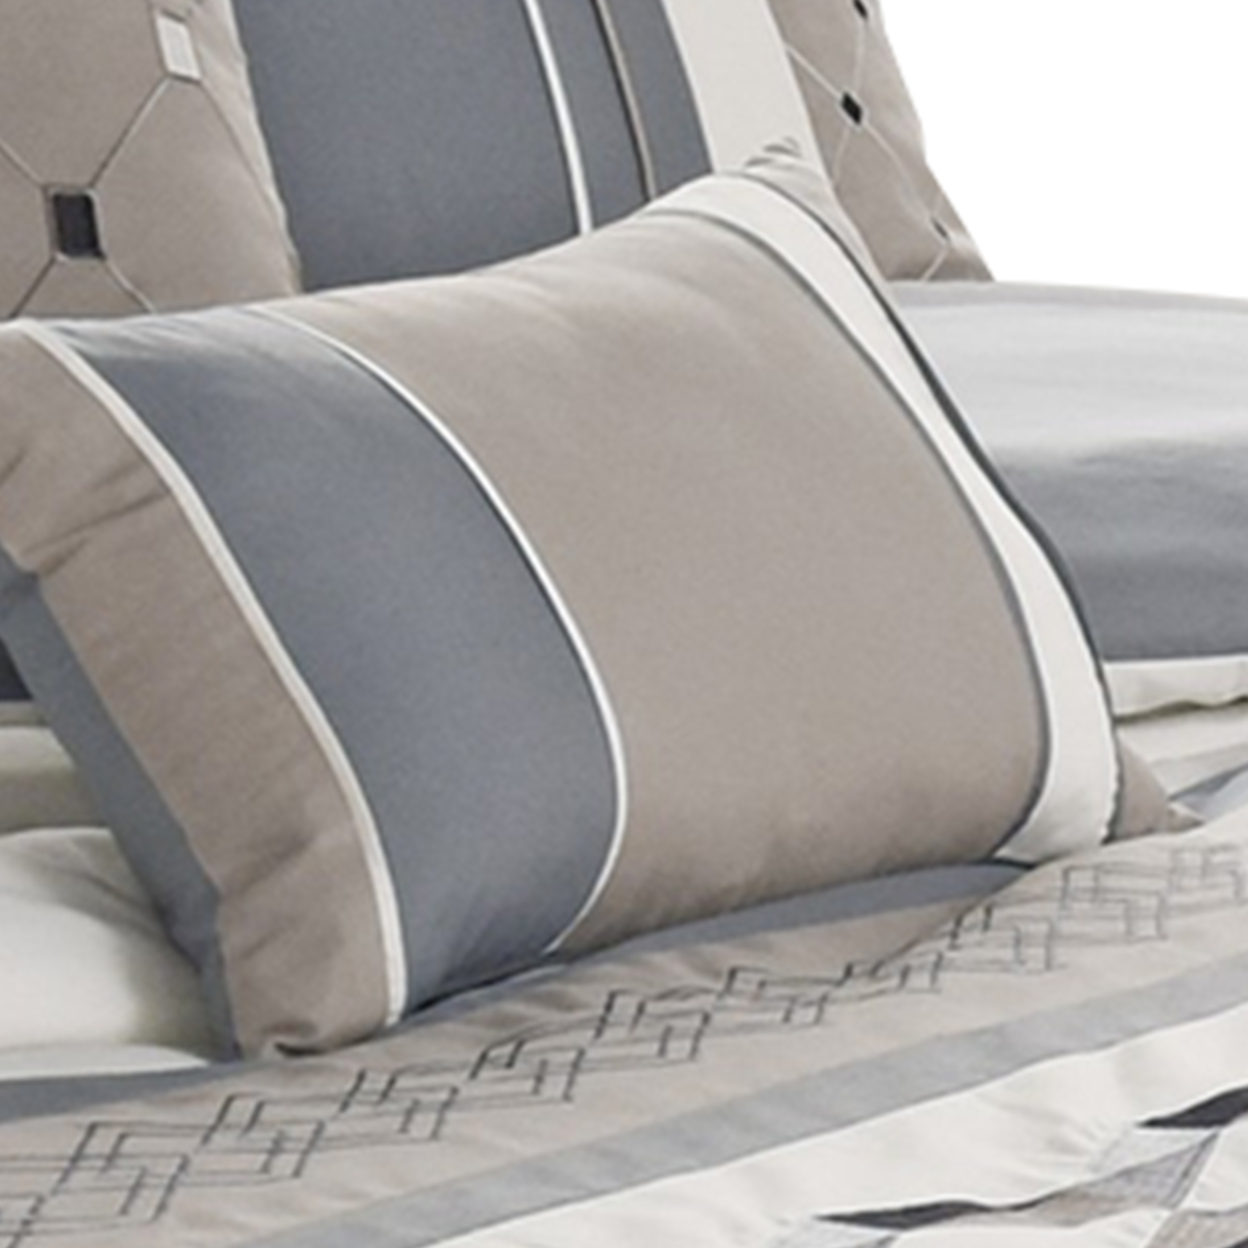 7 Piece King Polyester Comforter Set With Geometric Design, Blue And Gray- Saltoro Sherpi